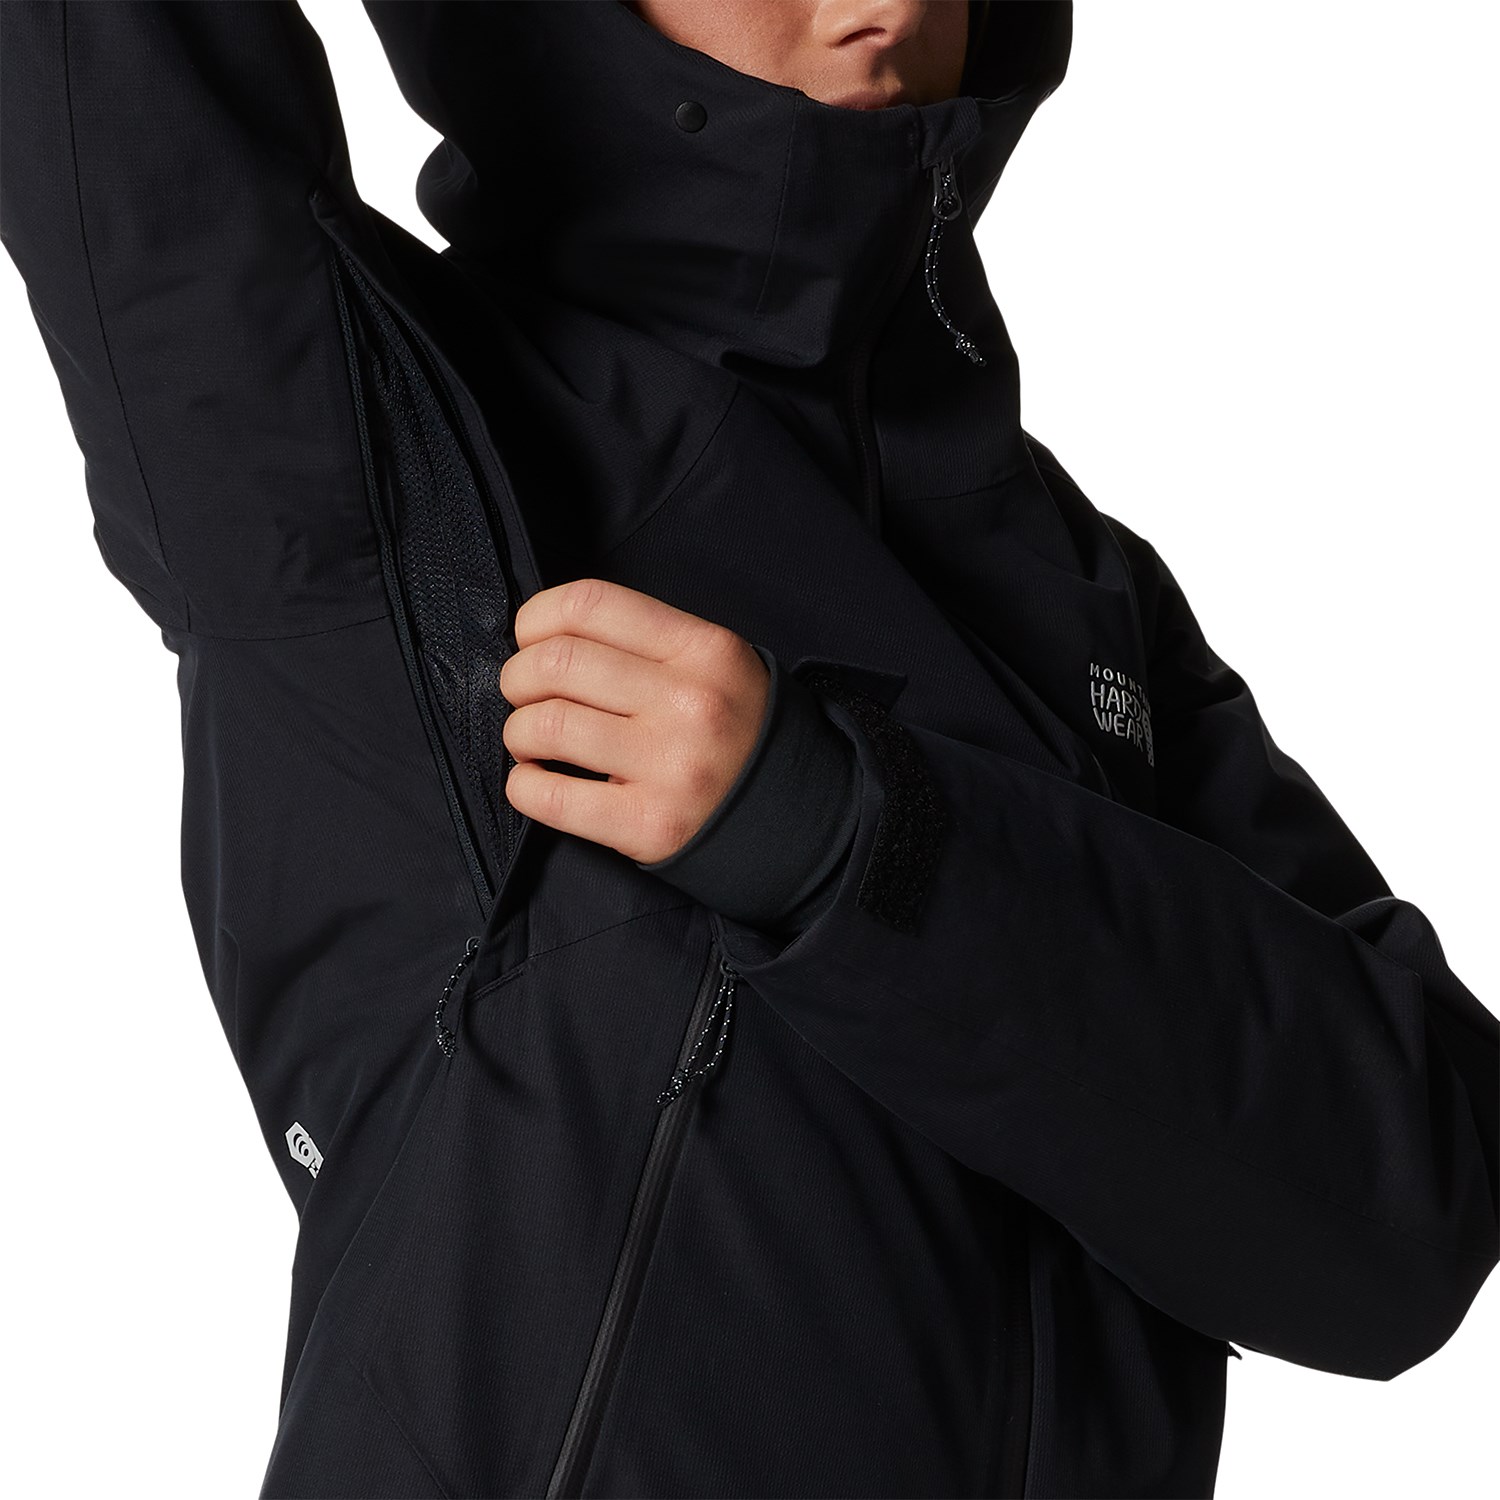 Mountain Hardwear Cloud Bank GORE-TEX LT Insulated Jacket